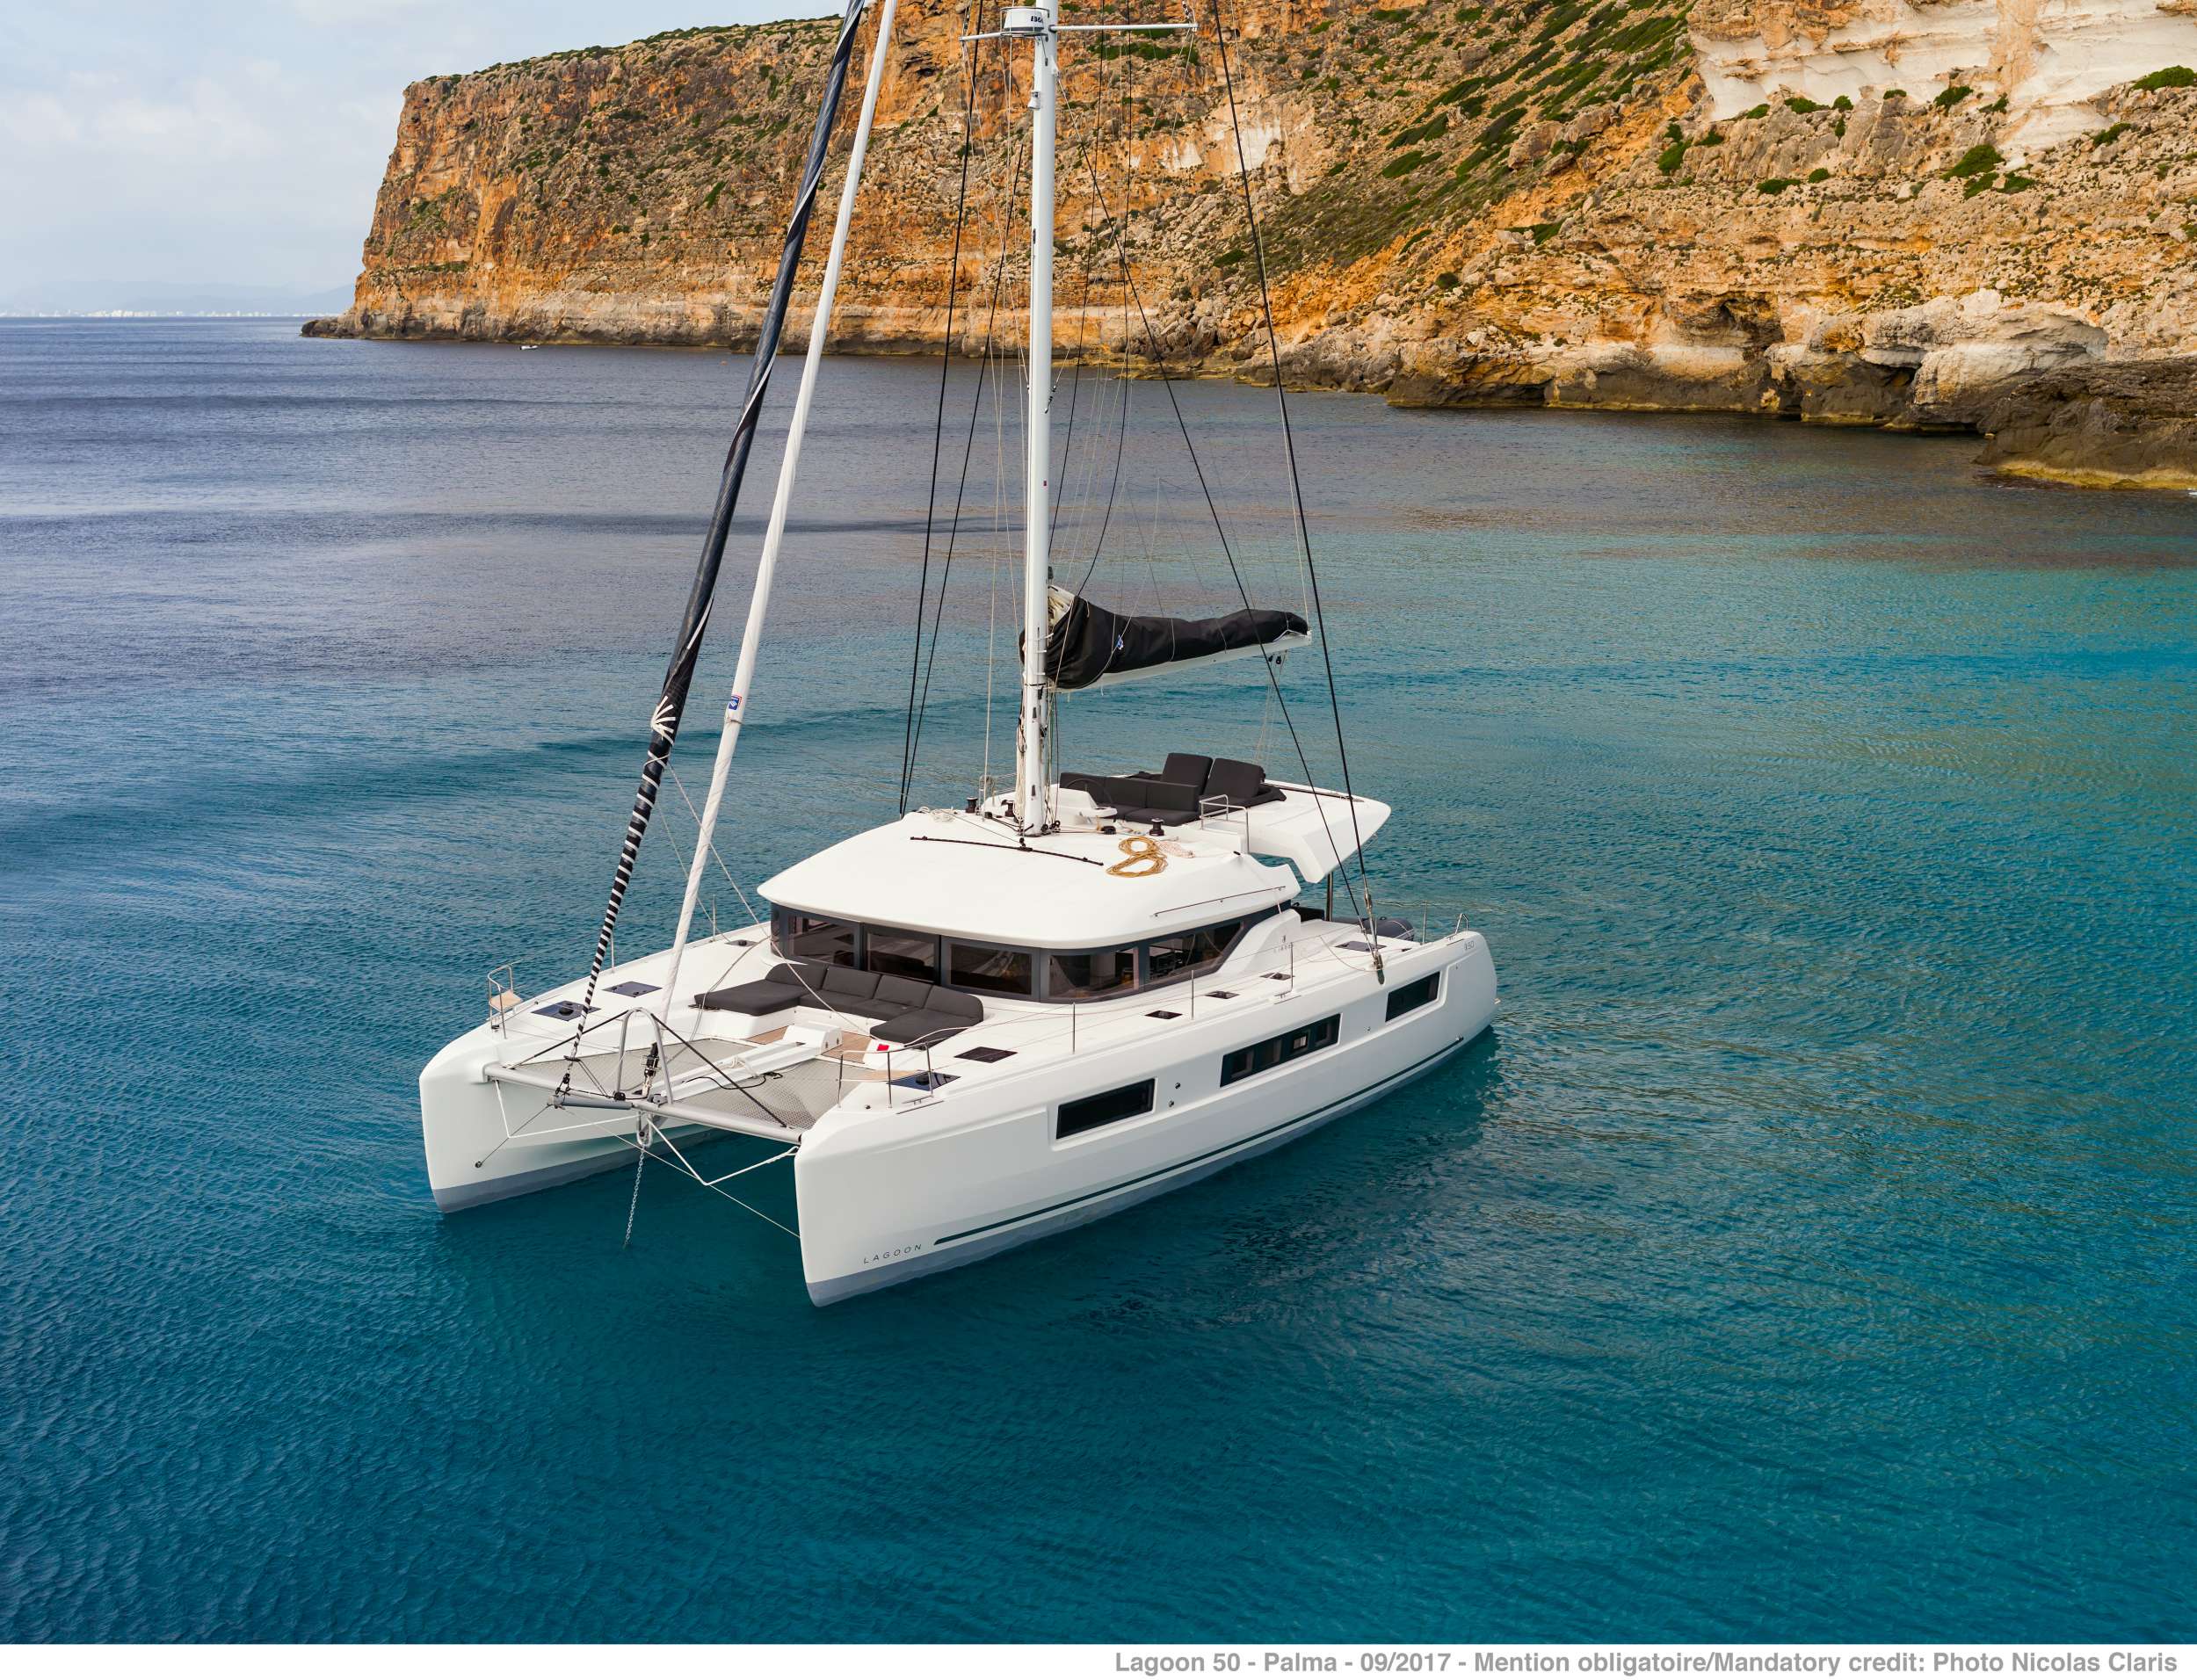 ONEIDA 2 - Yacht Charter Nea Moudania & Boat hire in Greece 1